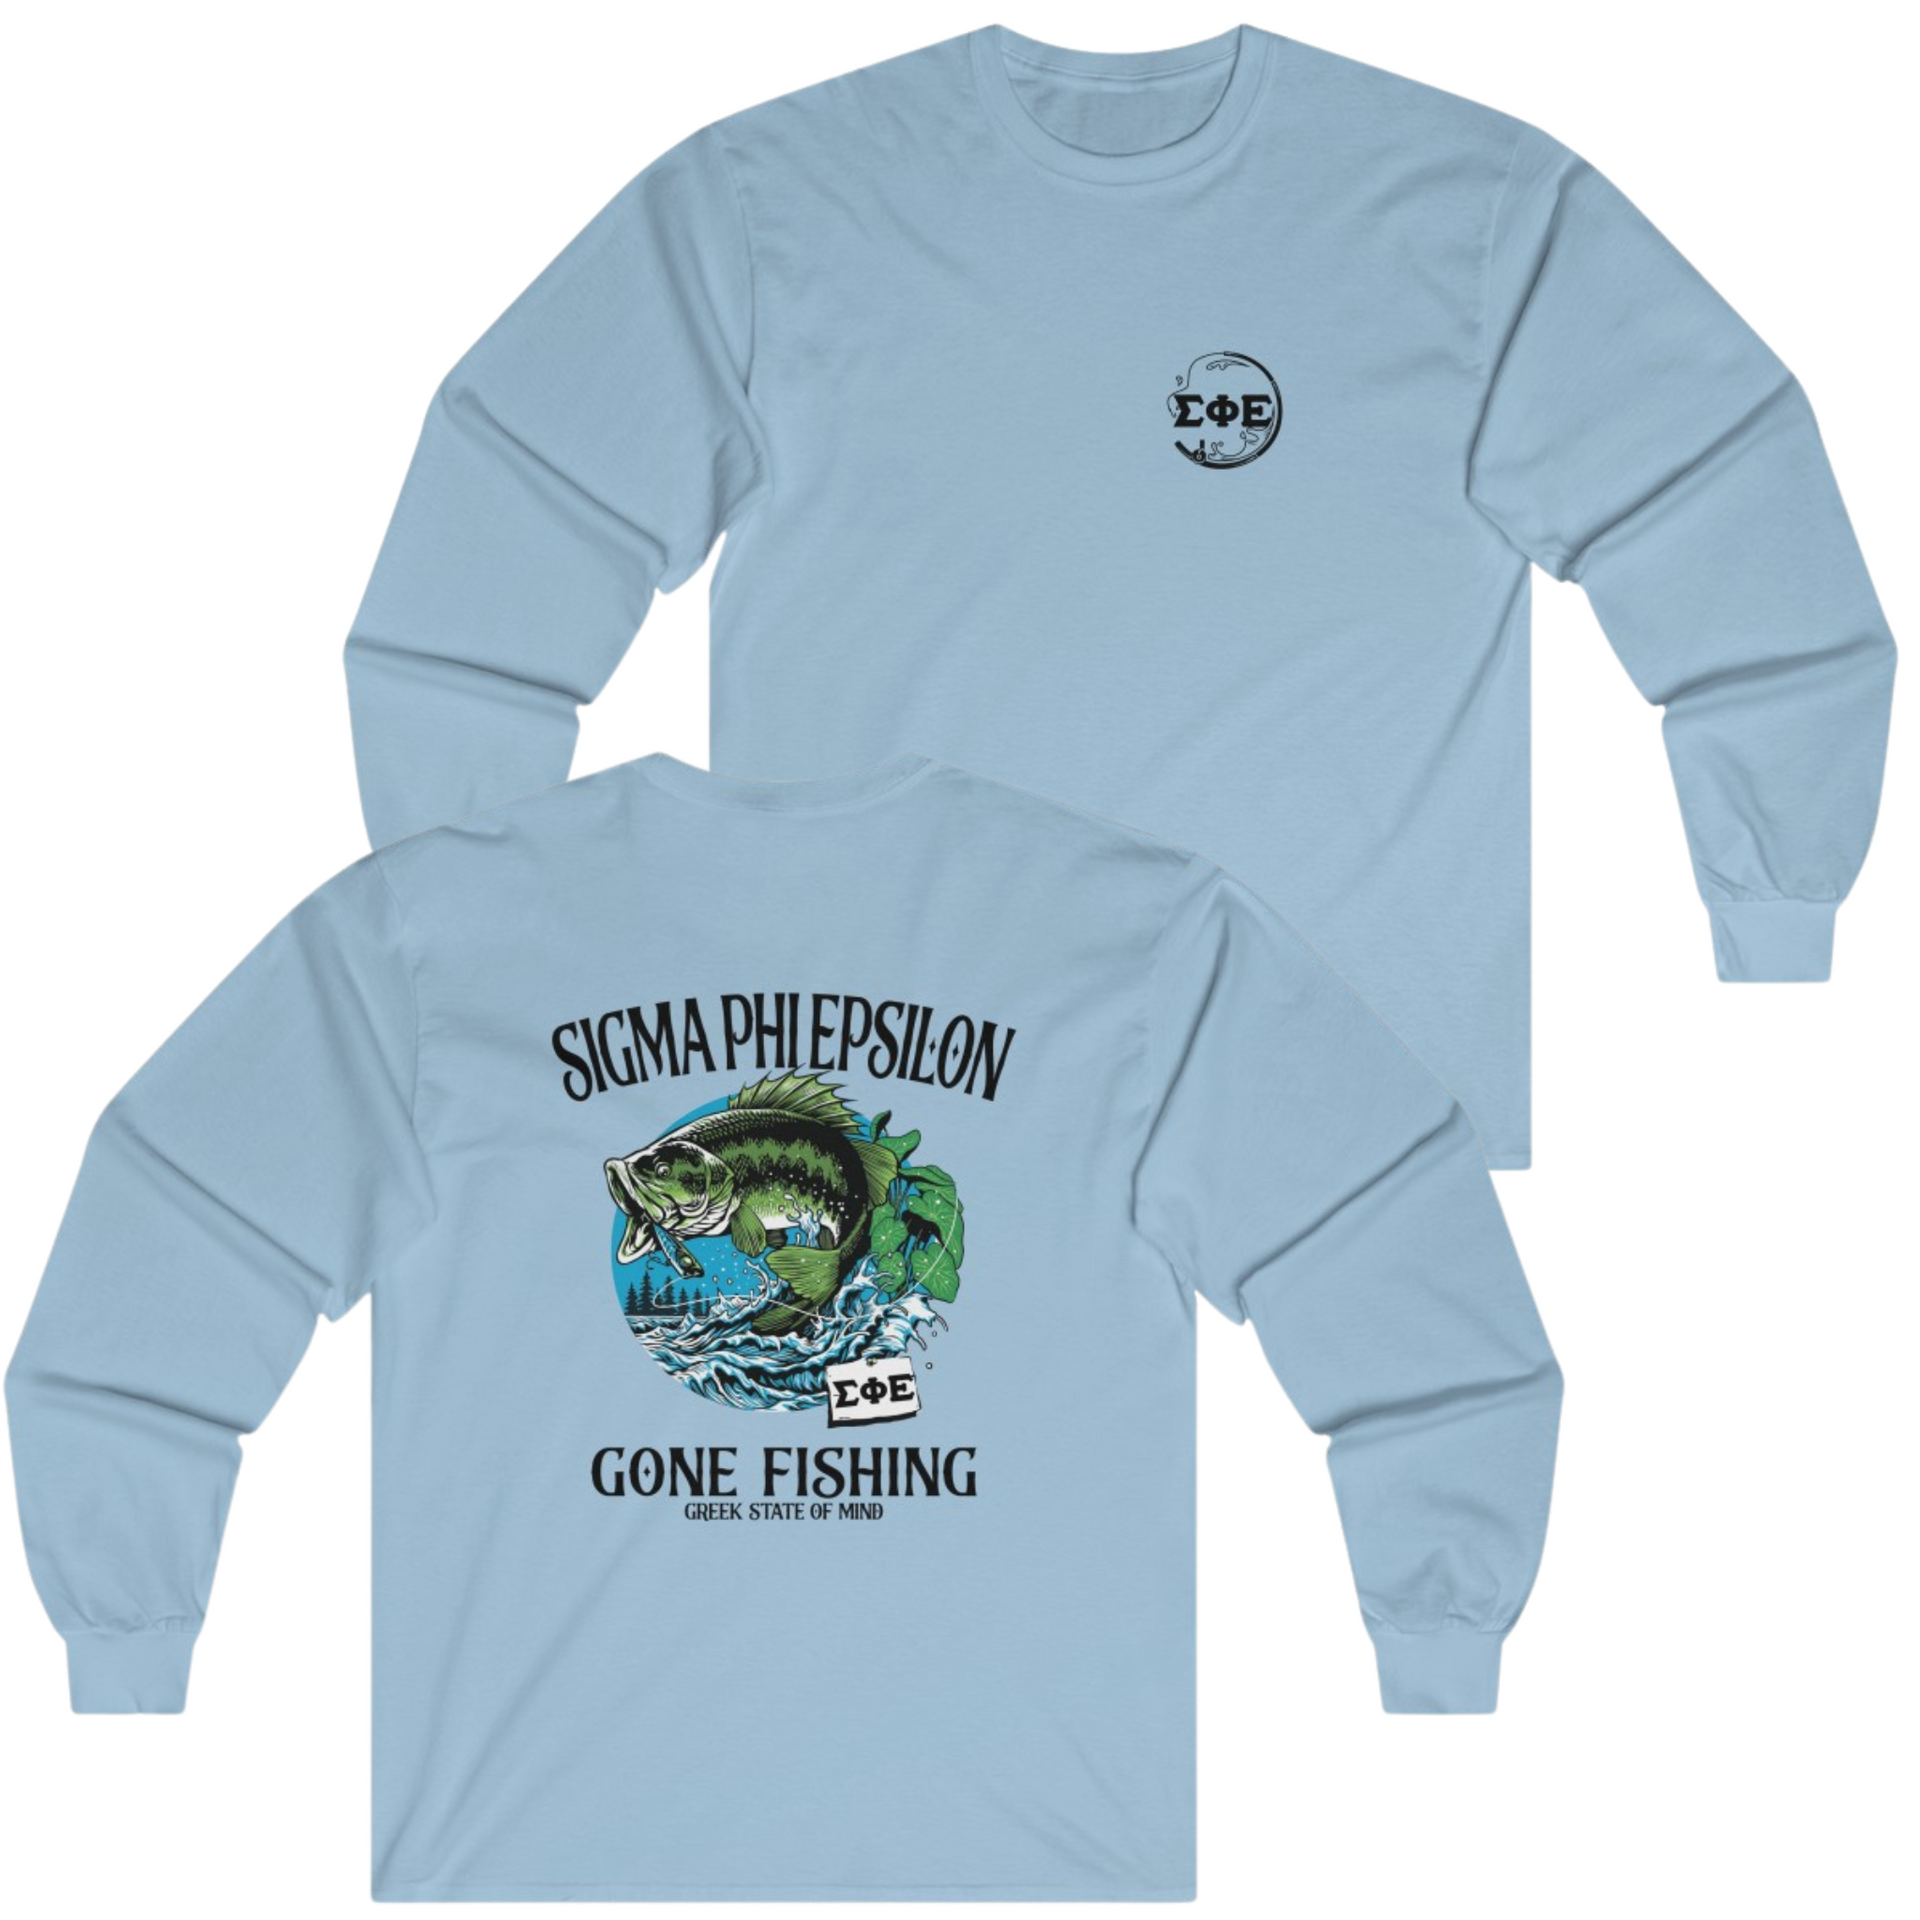 Light Blue Sigma Phi Epsilon Graphic Long Sleeve T-Shirt | Gone Fishing | SigEp Clothing - Campus Apparel